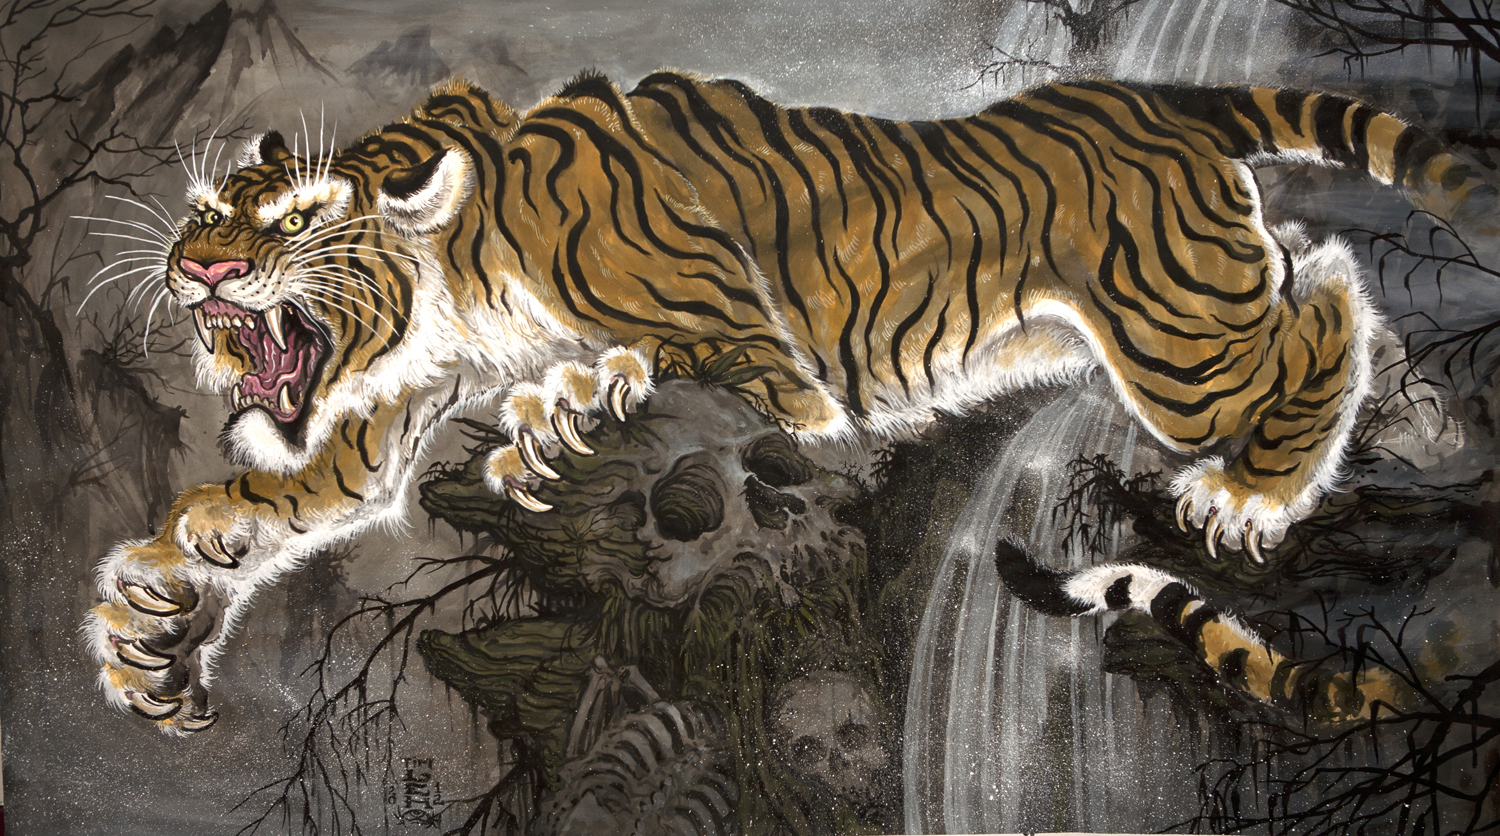 BlackHeart Tattoo San Francisco: high on FIRE album art & giant tiger